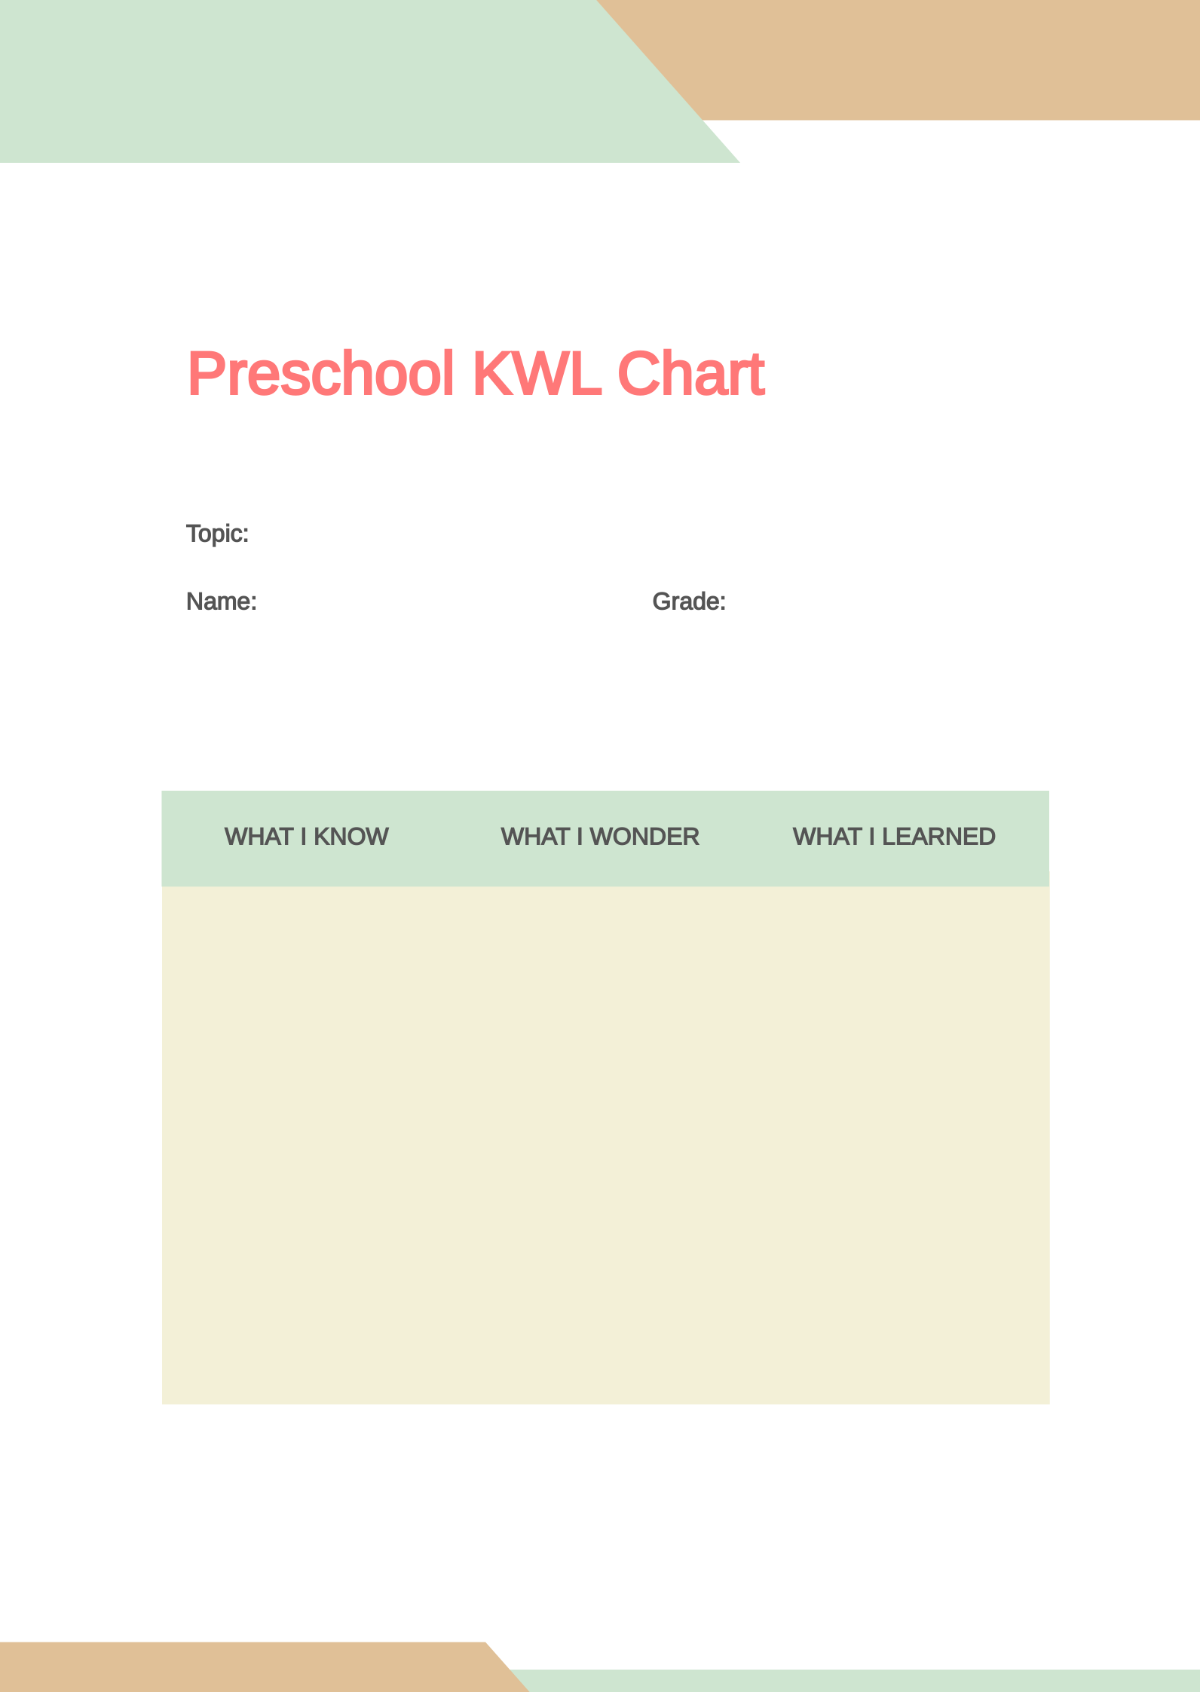 Free Preschool KWL Chart Template